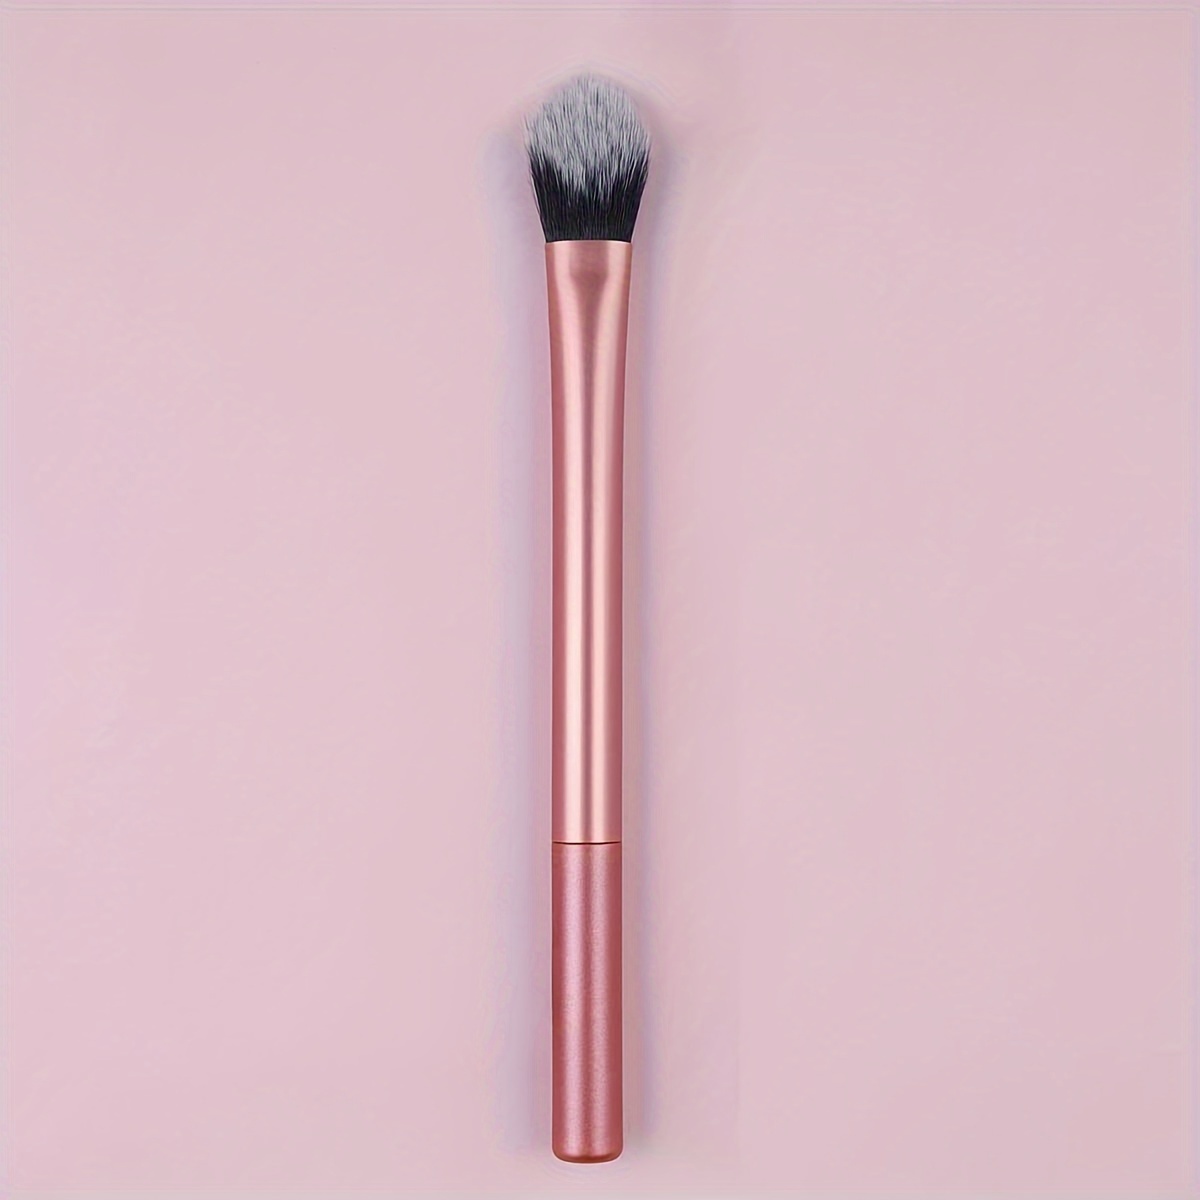 Makeup Brush with 1PCS Round Slanted Foundation Brush and 1PCS Mini Angled  Concealer Brush Flat Top Kabuki Nose Contour Brush Perfect for Blending  Liquid,Buffing,Cream,Sculpting,Mineral Makeup 